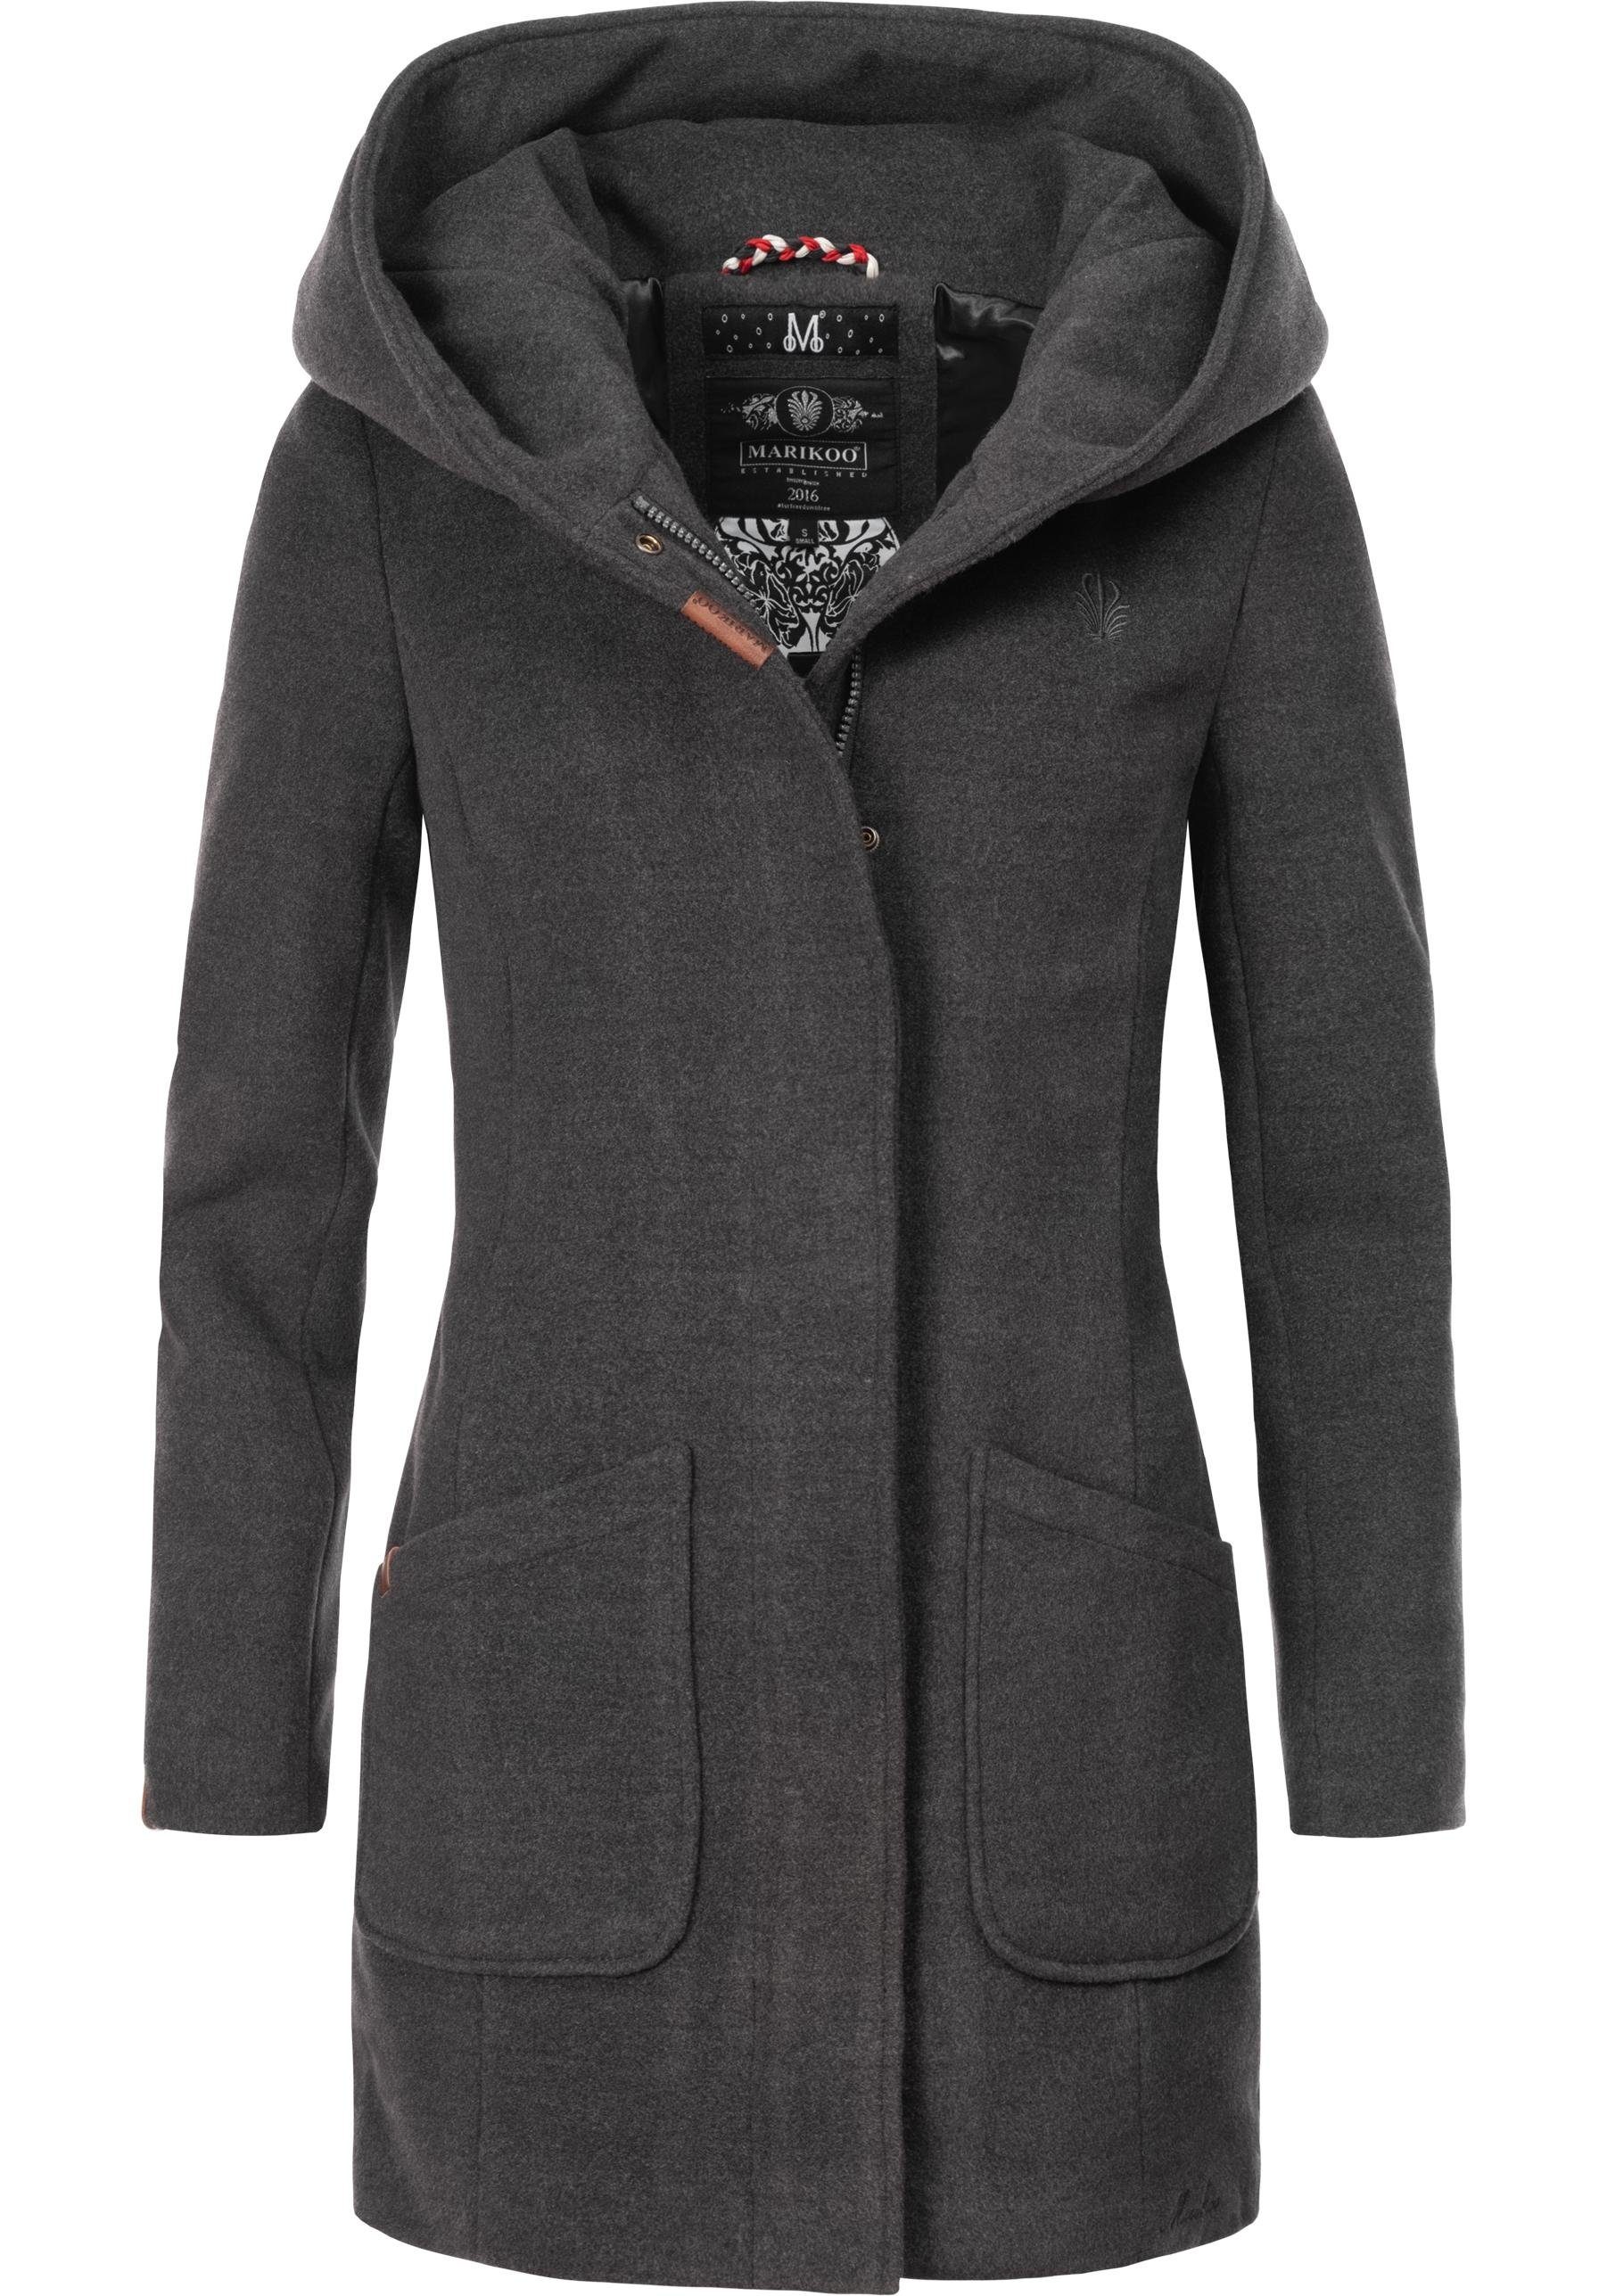 Marikoo Wintermantel »Maikoo« hochwertiger Mantel mit großer Kapuze